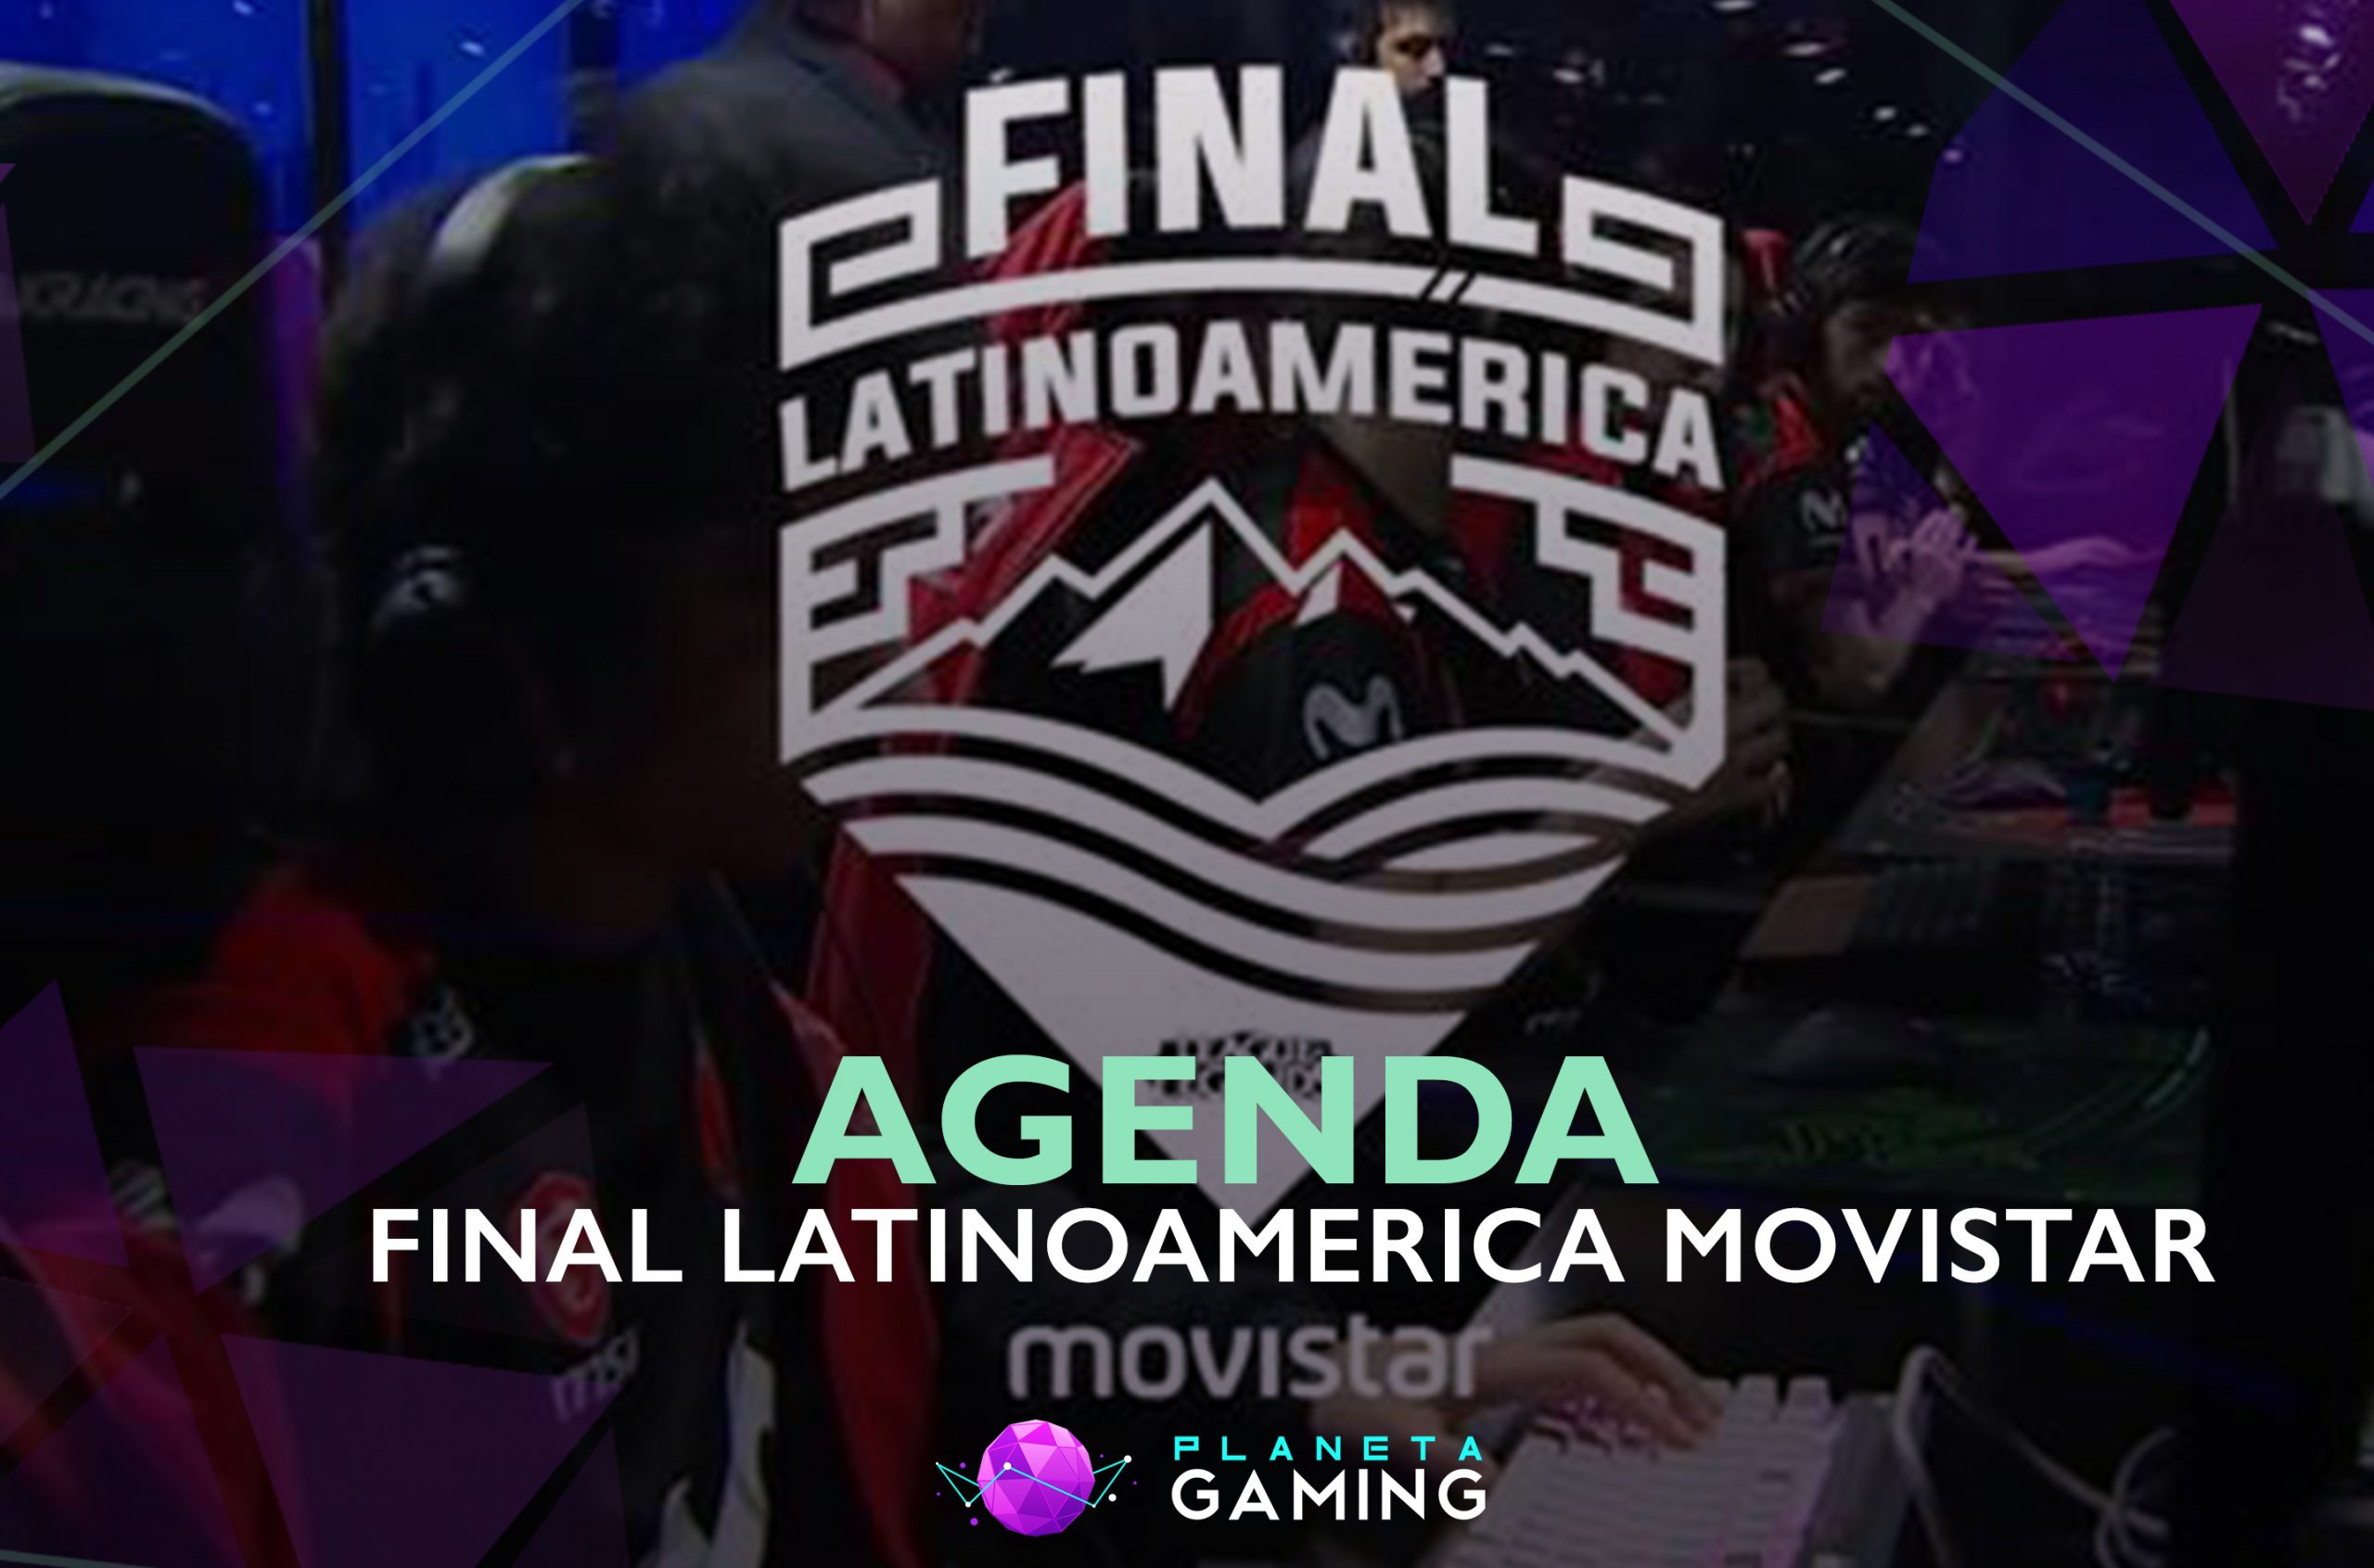 Agenda Final Latinoamerica Movistar